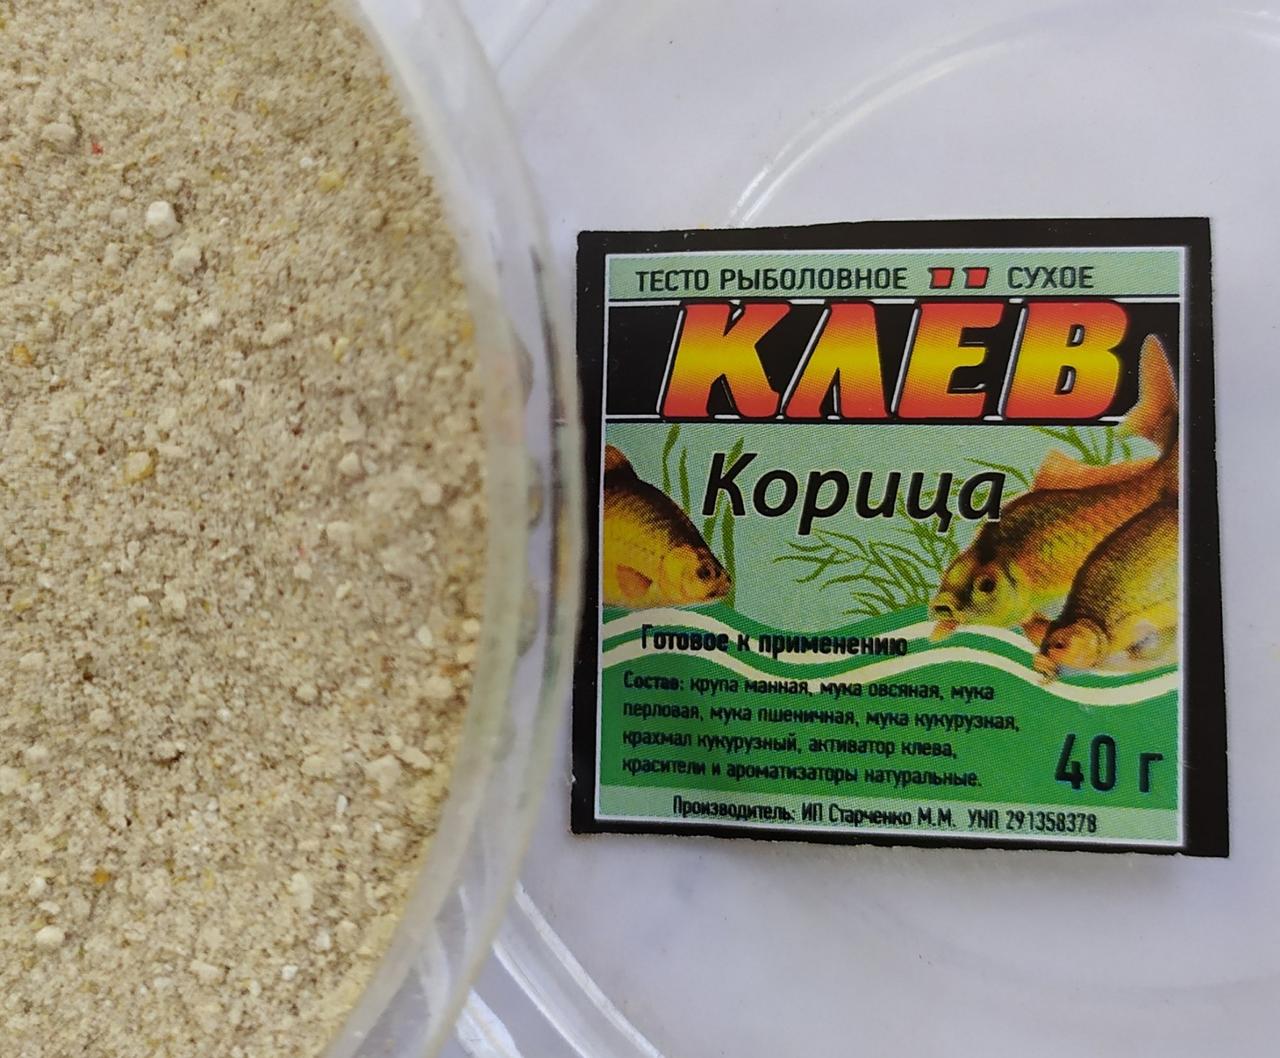 Тесто рыболовное сухое "КЛЁВ" корица